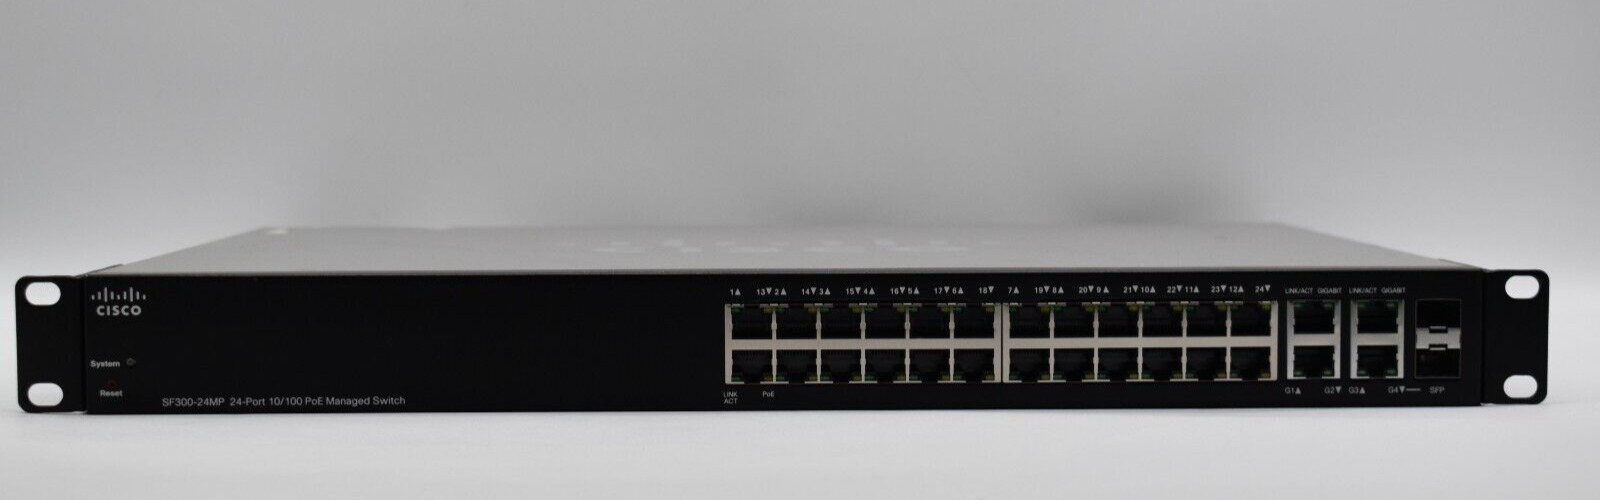 Cisco SF300-24MP 24-Port 10/100 PoE Managed Switch